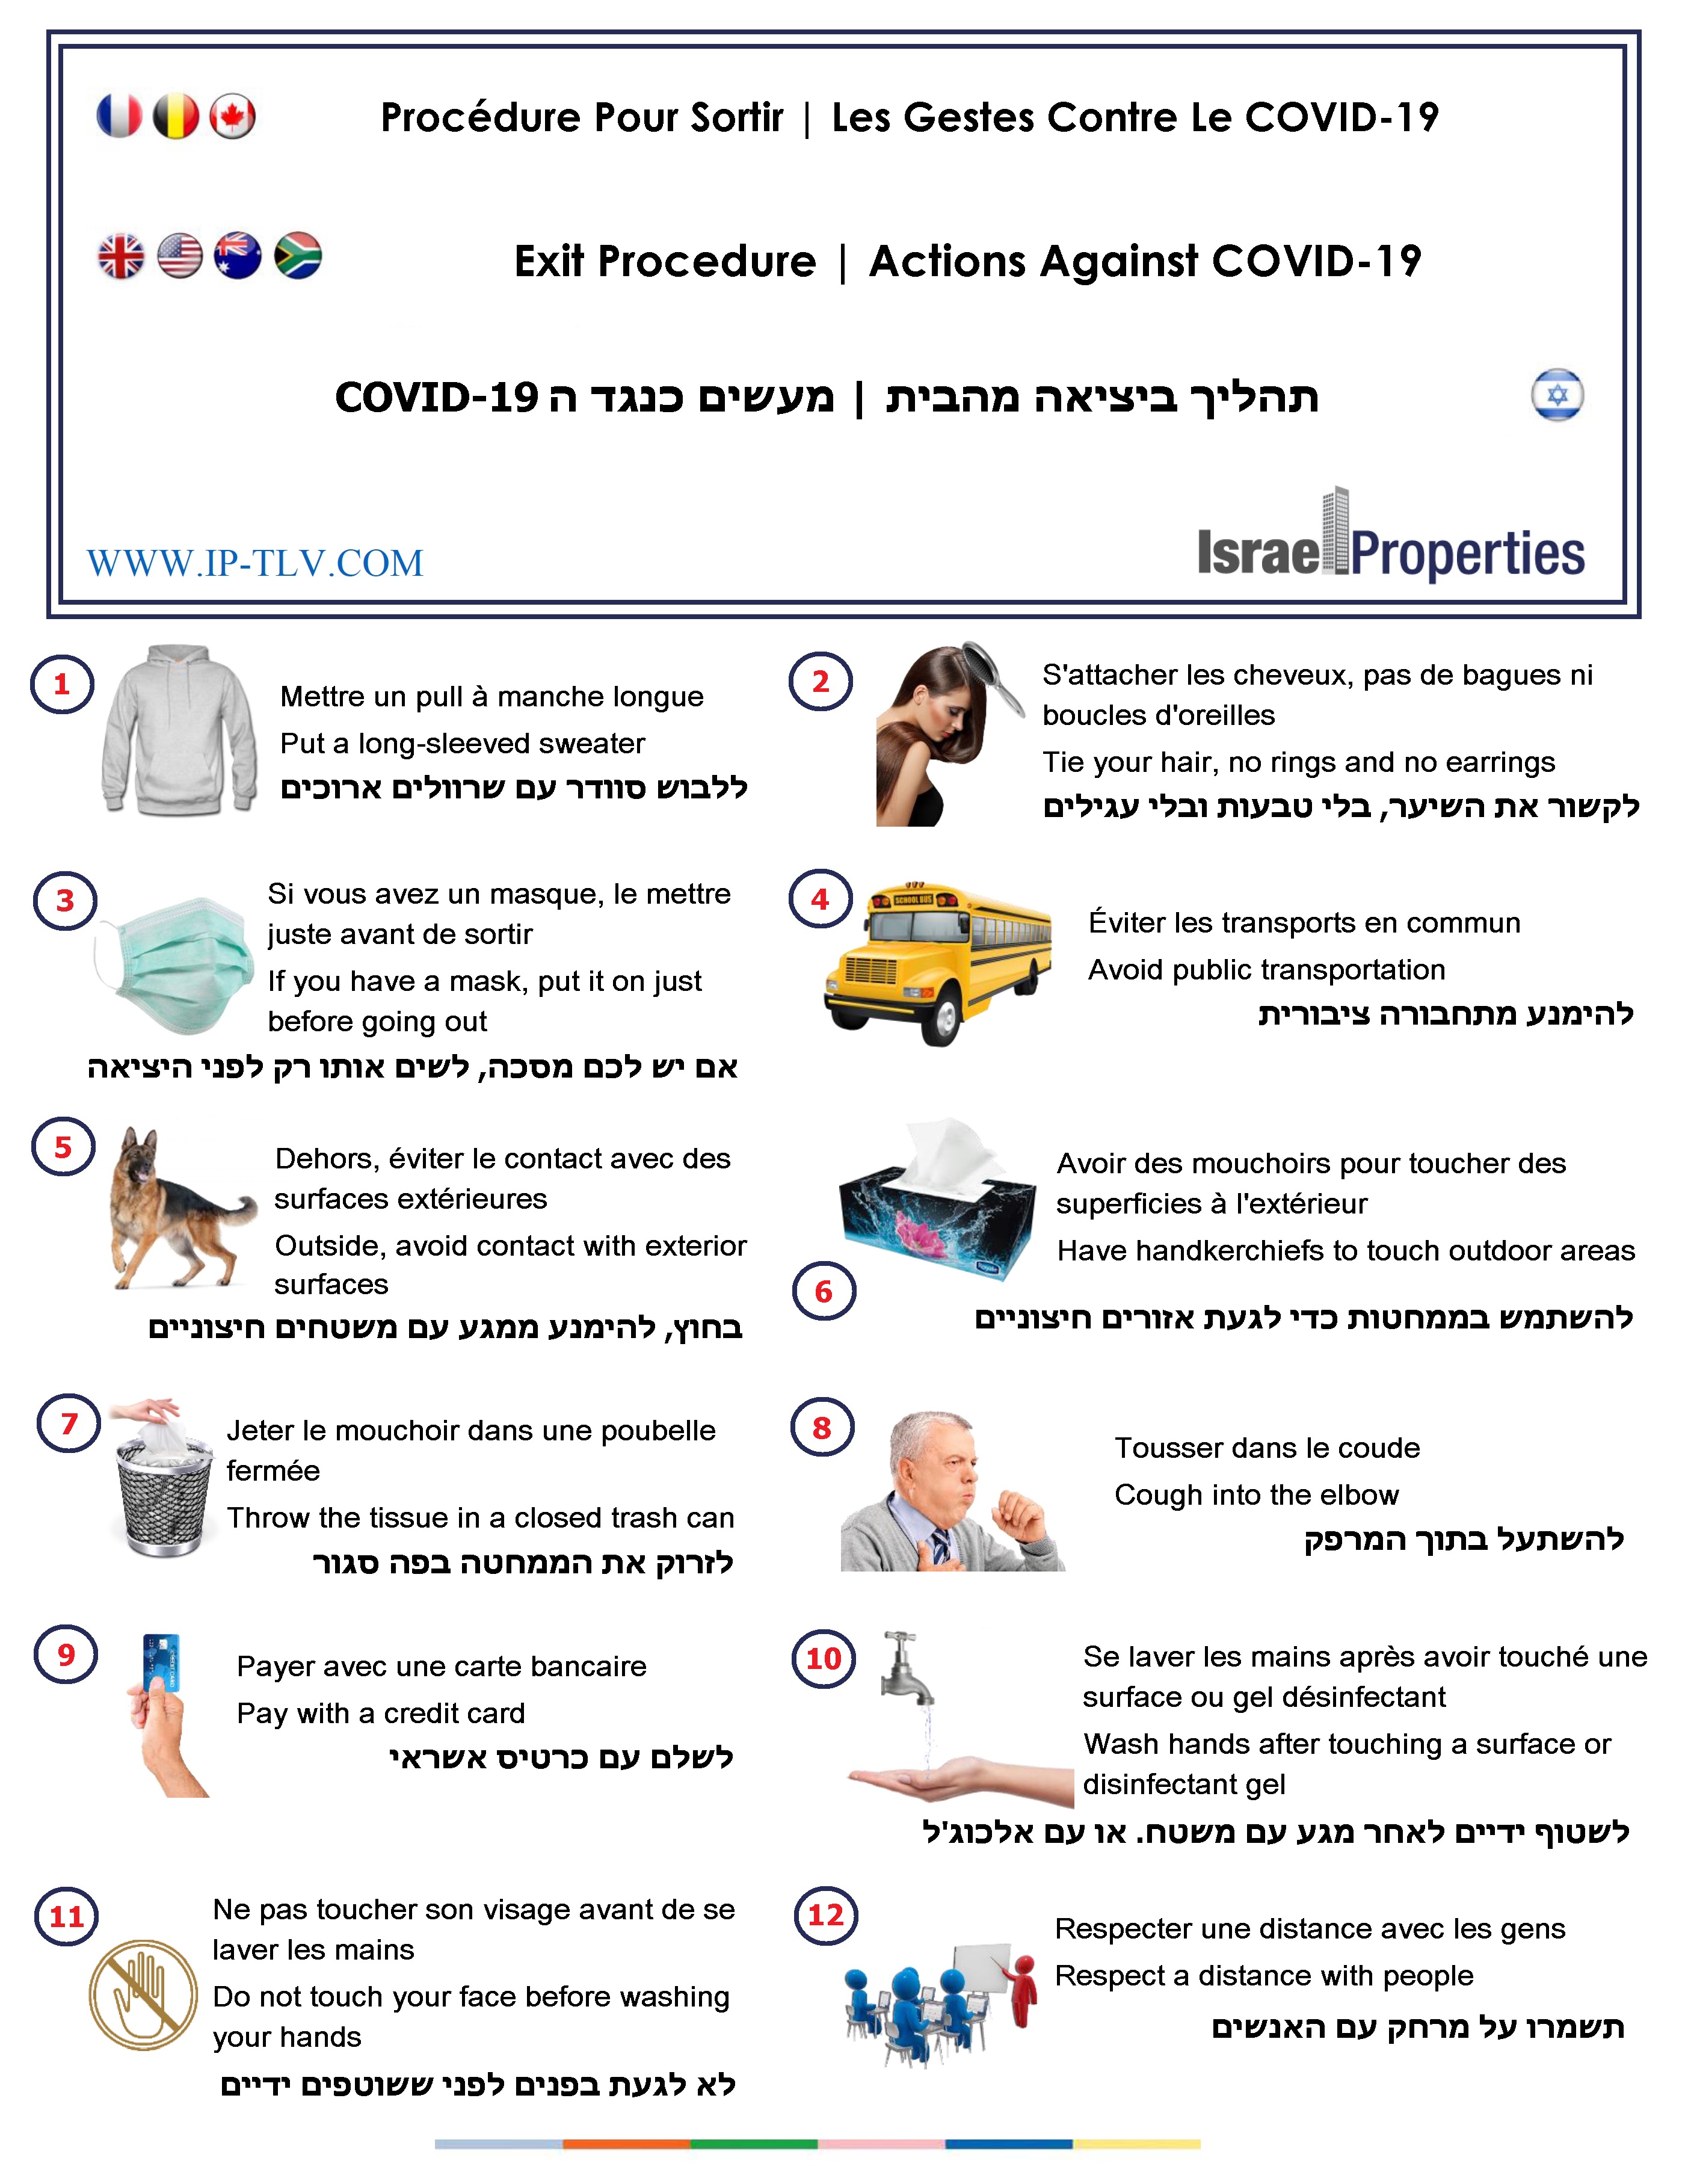 Exit Procedure Actions Against COVID-19